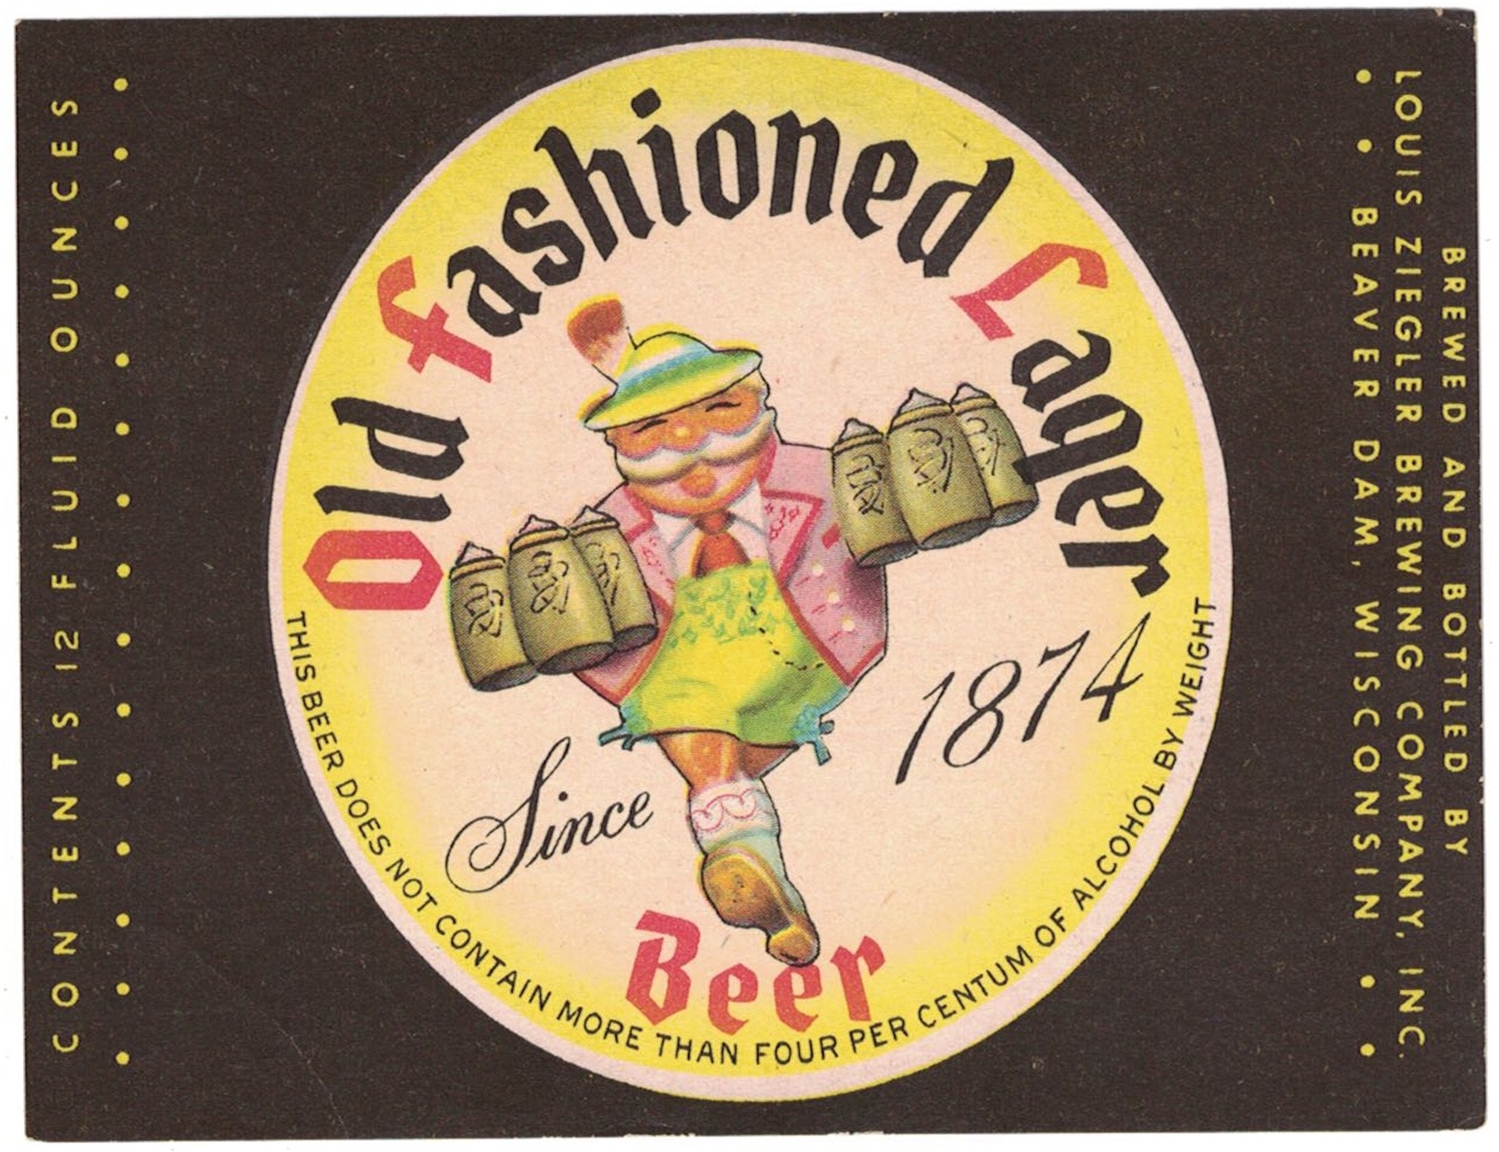 Old Fashion Lager Label